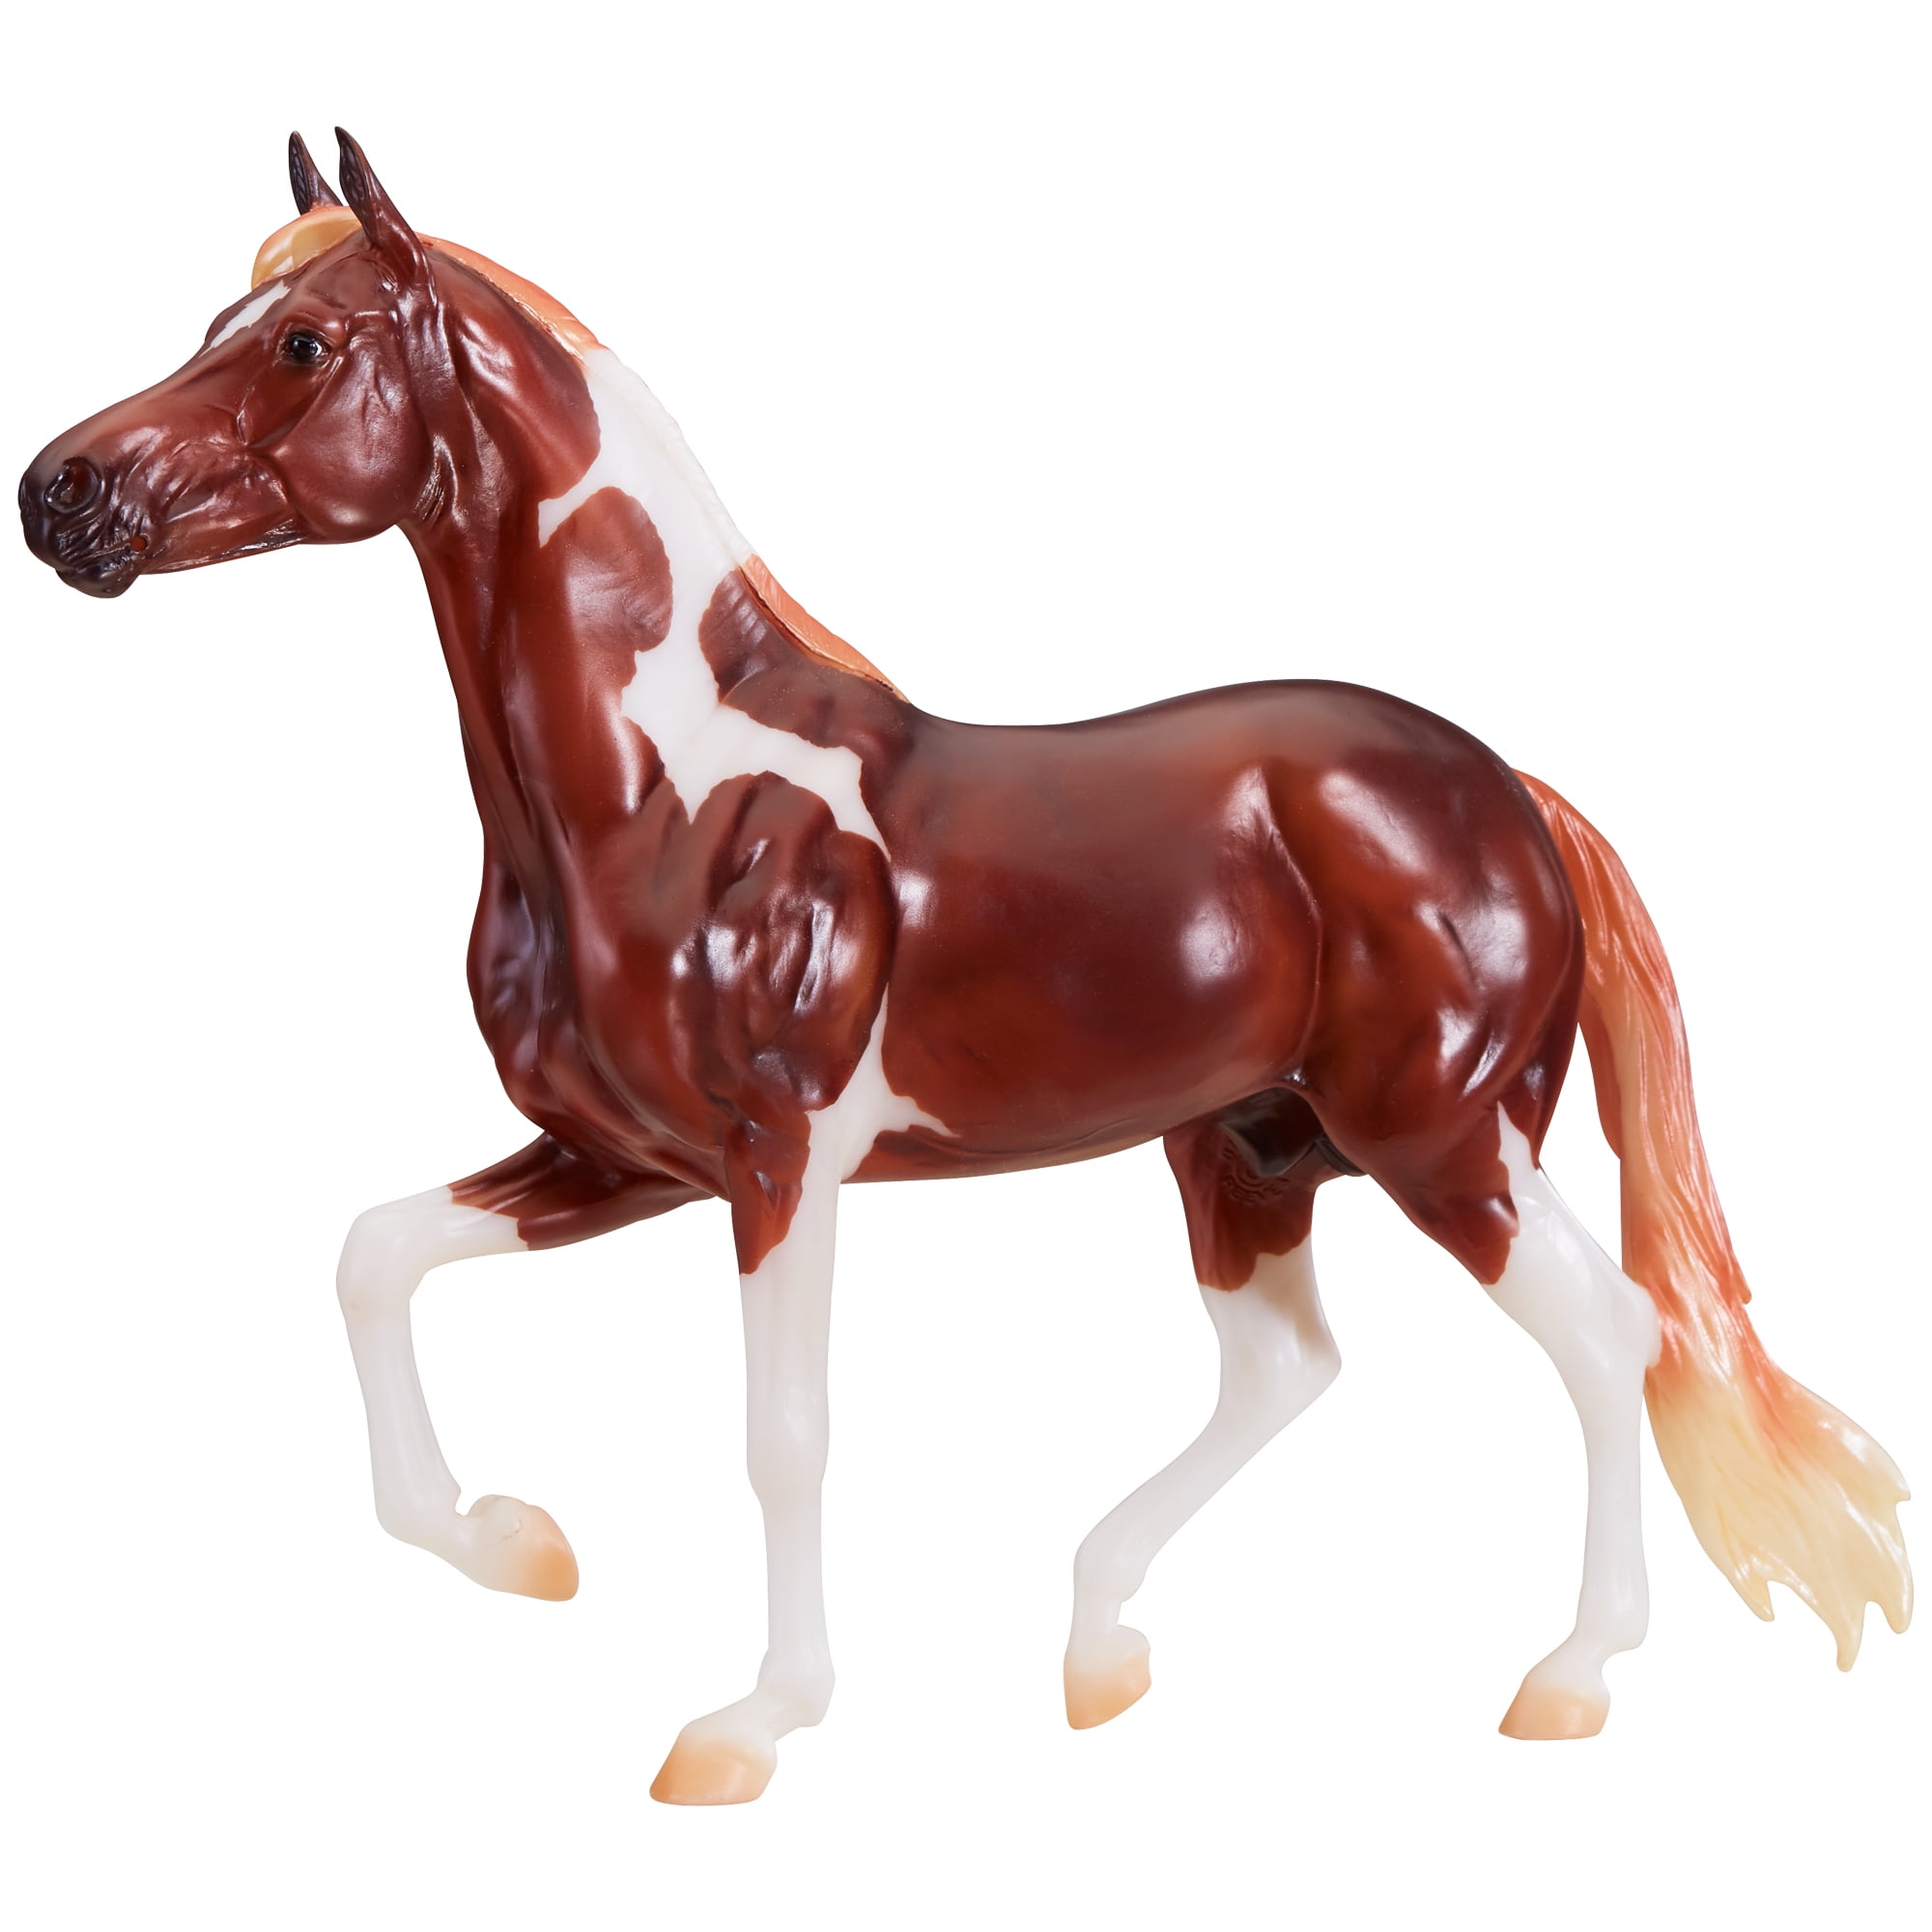 Breyer Traditional Series Enzo - Mangalarga Marchador Toy Horse Figure ...